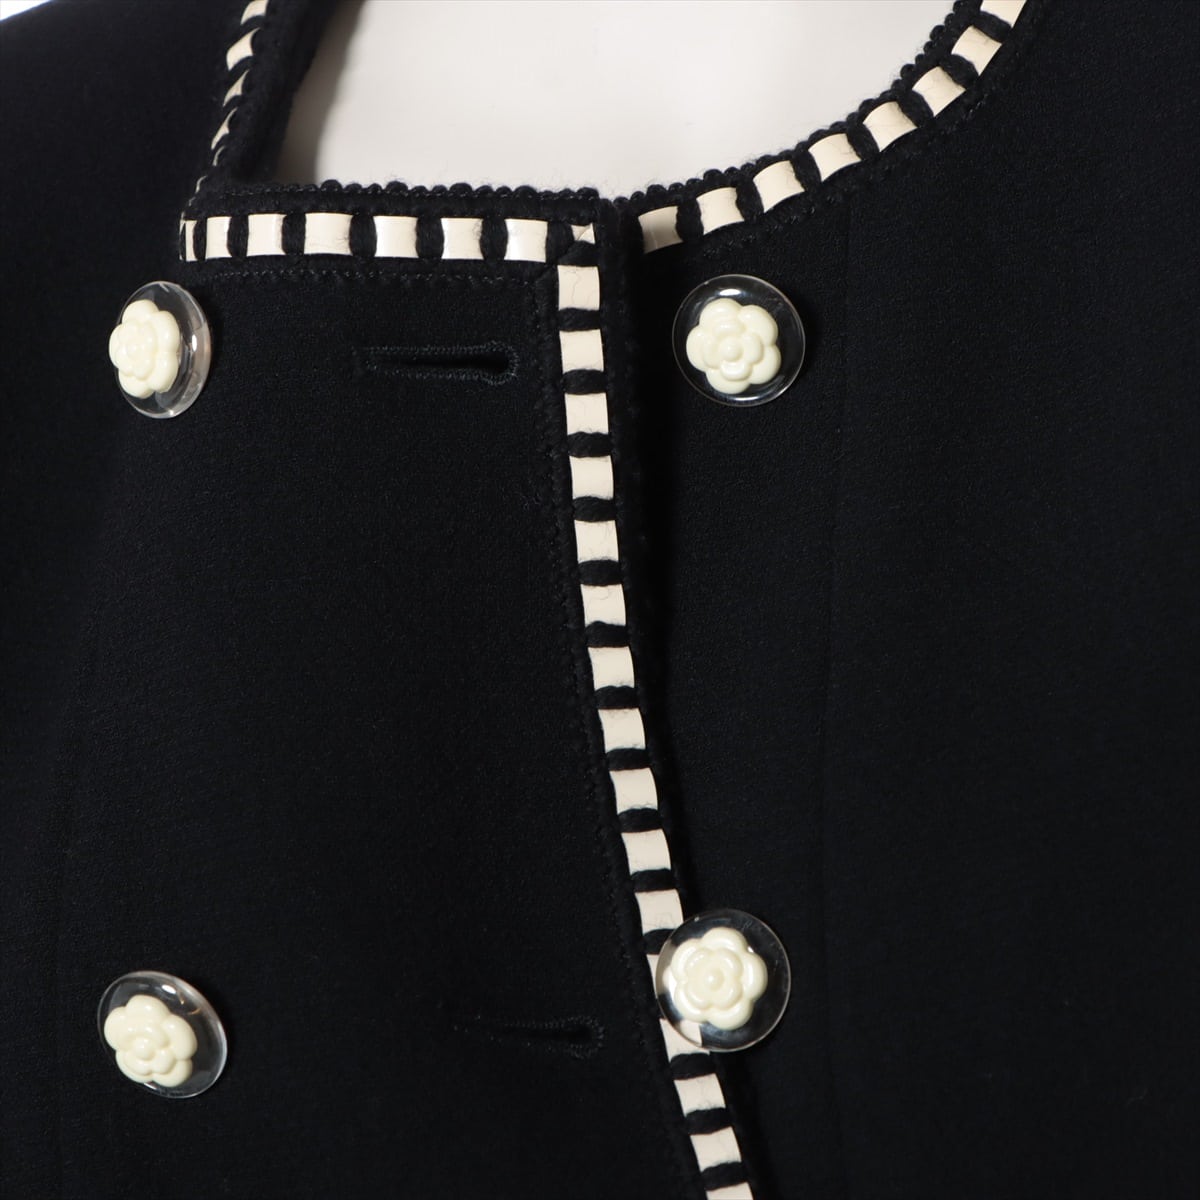 Chanel Wool Setup 40 Ladies' Black  Camellia button